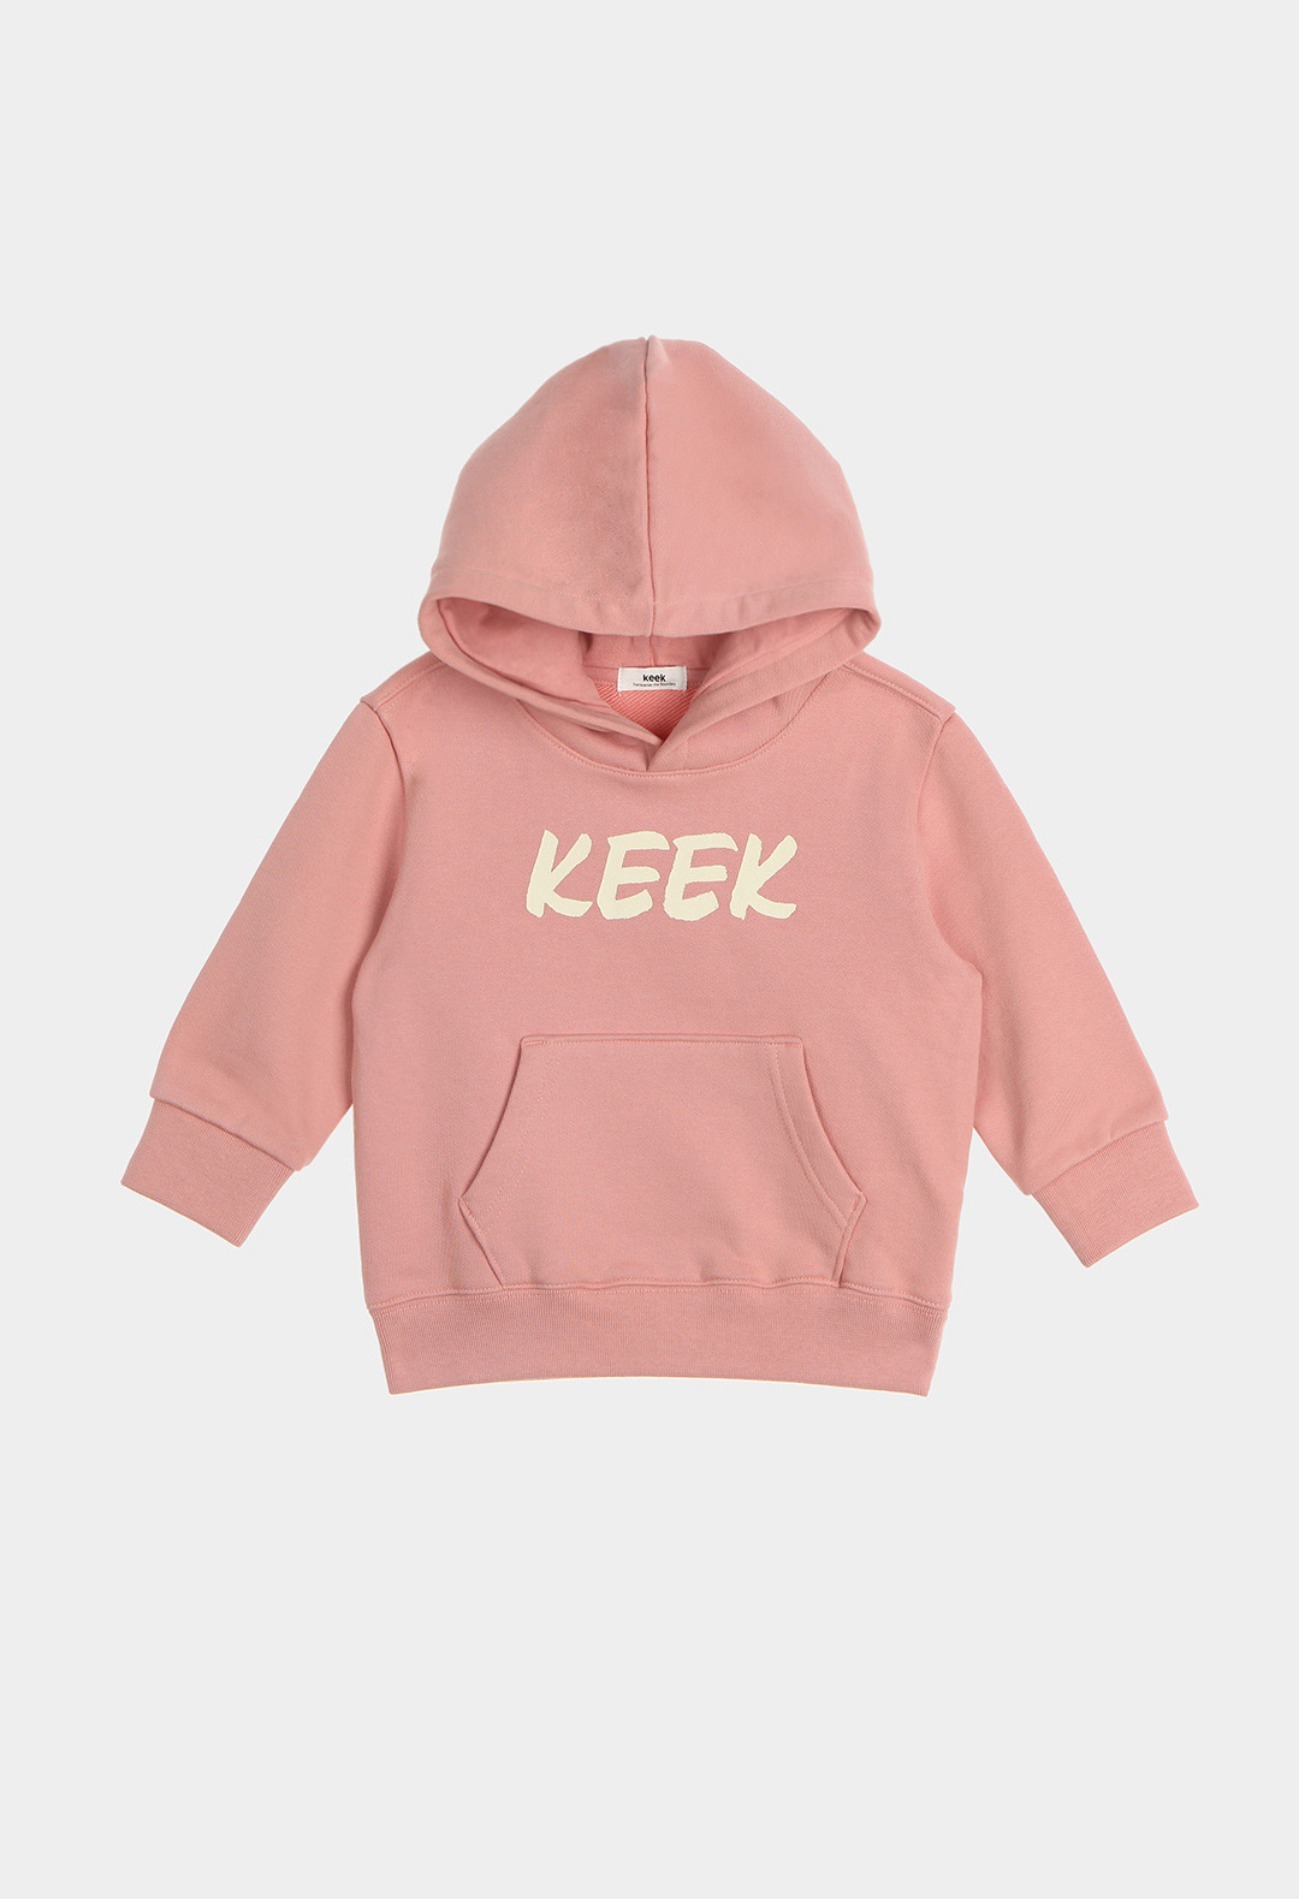 keek [Kids] KEEEK Hoodie - Vintage Pink 스트릿패션 유니섹스브랜드 커플시밀러룩 남자쇼핑몰 여성의류쇼핑몰 후드티 힙색